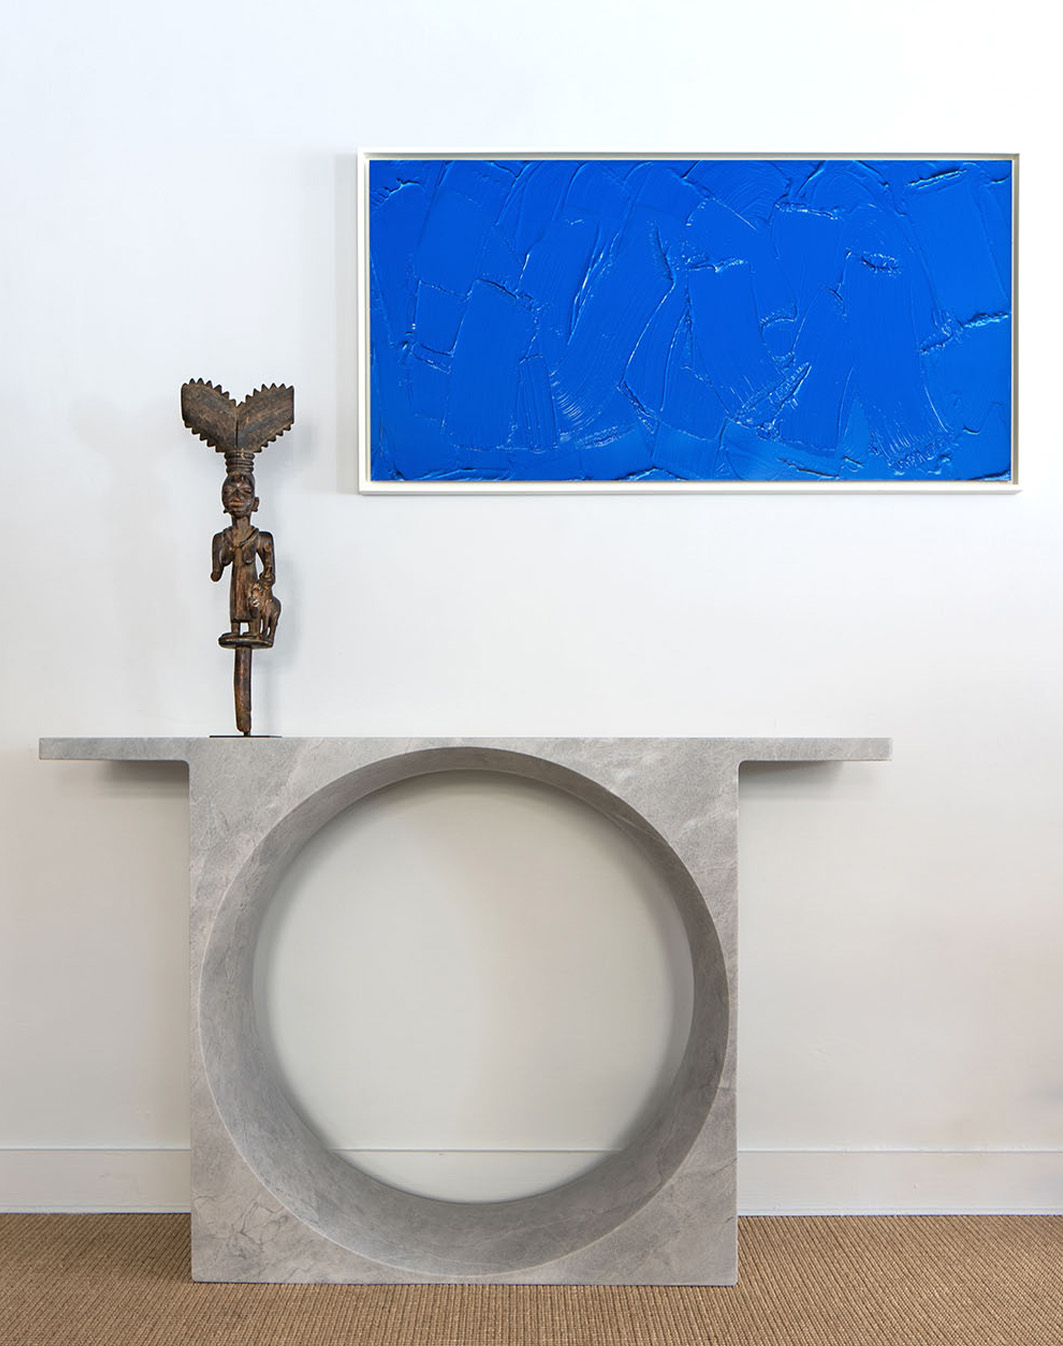 Jaime Hayon - Lucas Ratton x kamel mennour x Galerie kreo @Saint-Tropez